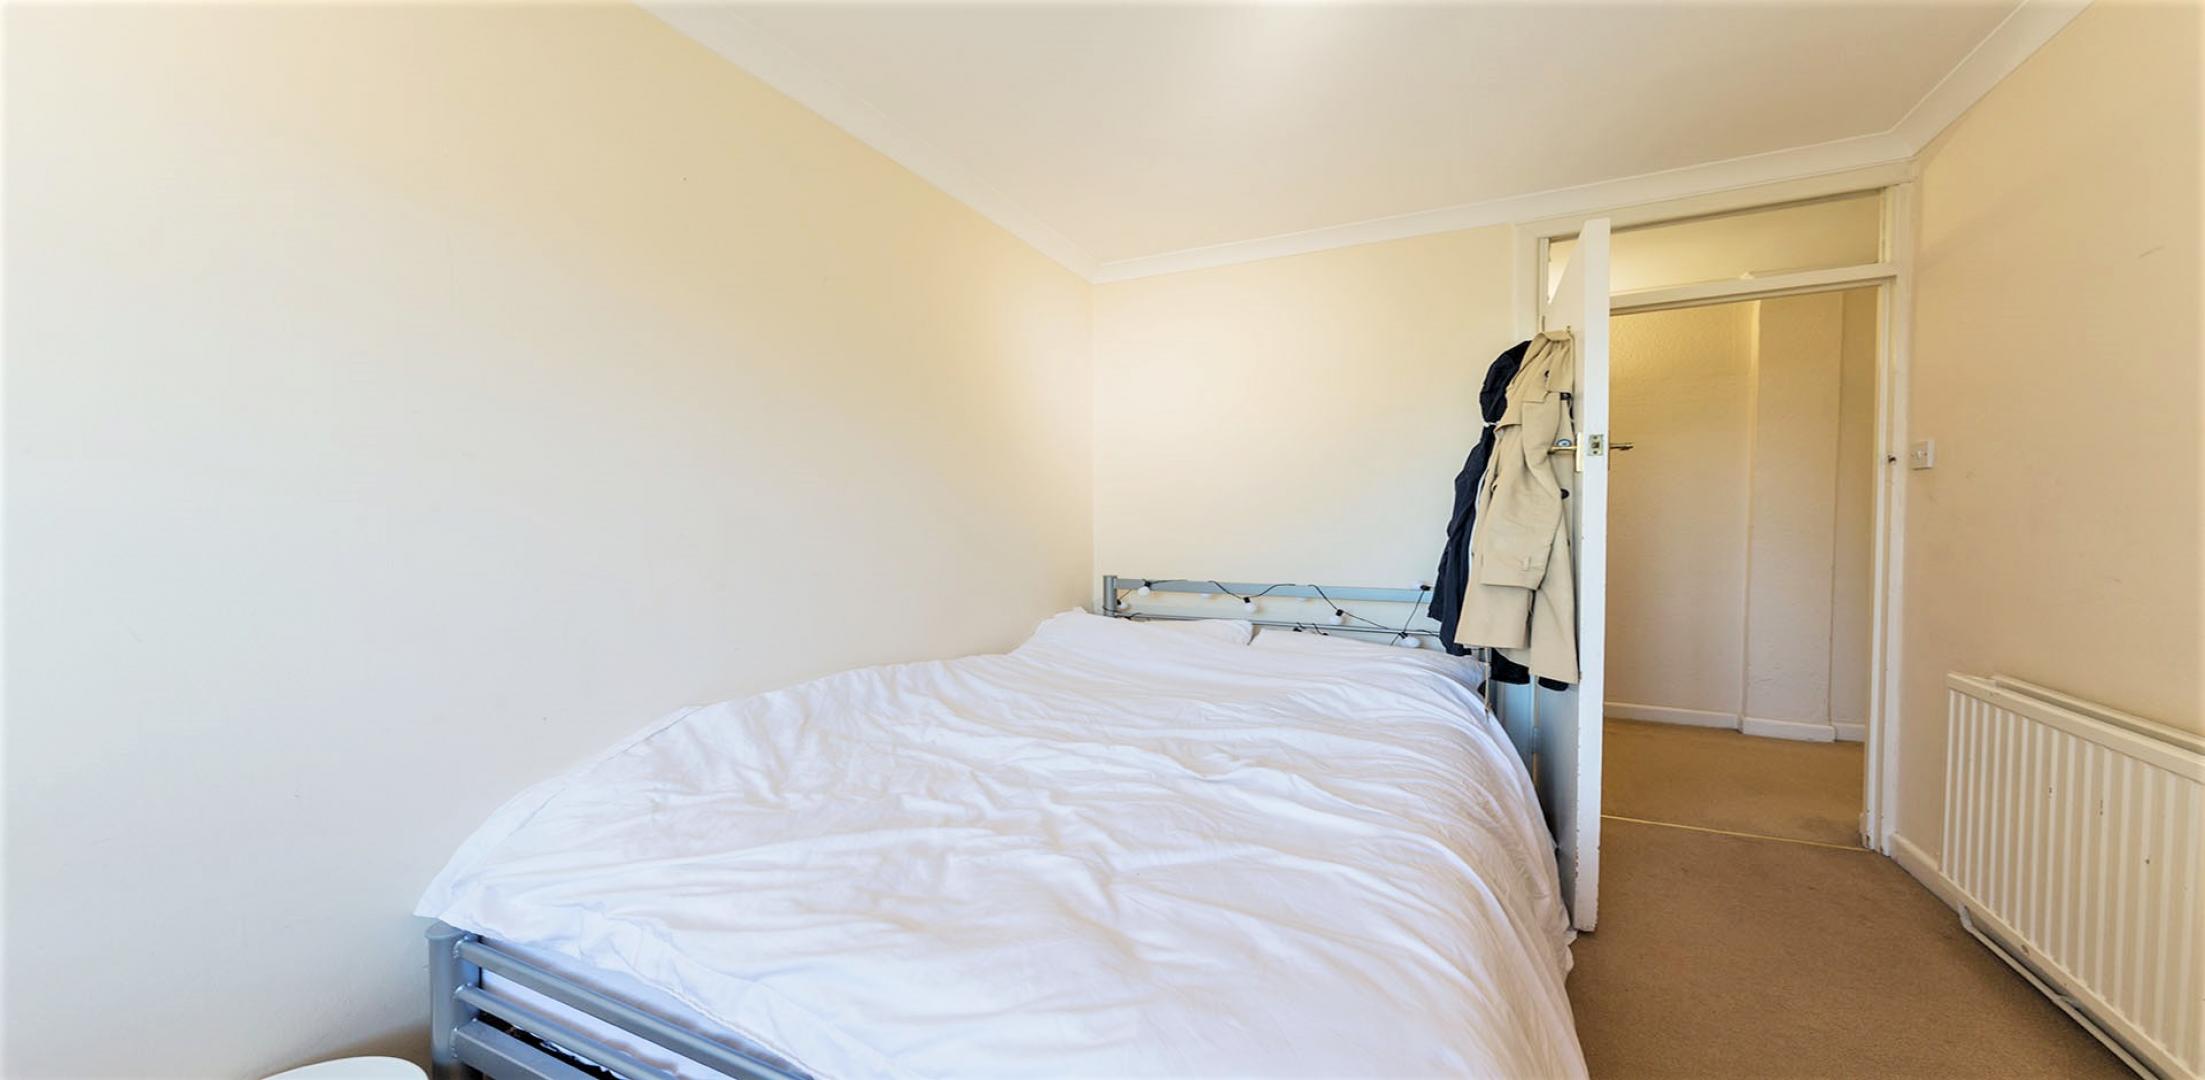 			2 Bedroom, 1 bath, 1 reception Flat			 Mapesbury Road, Kilburn